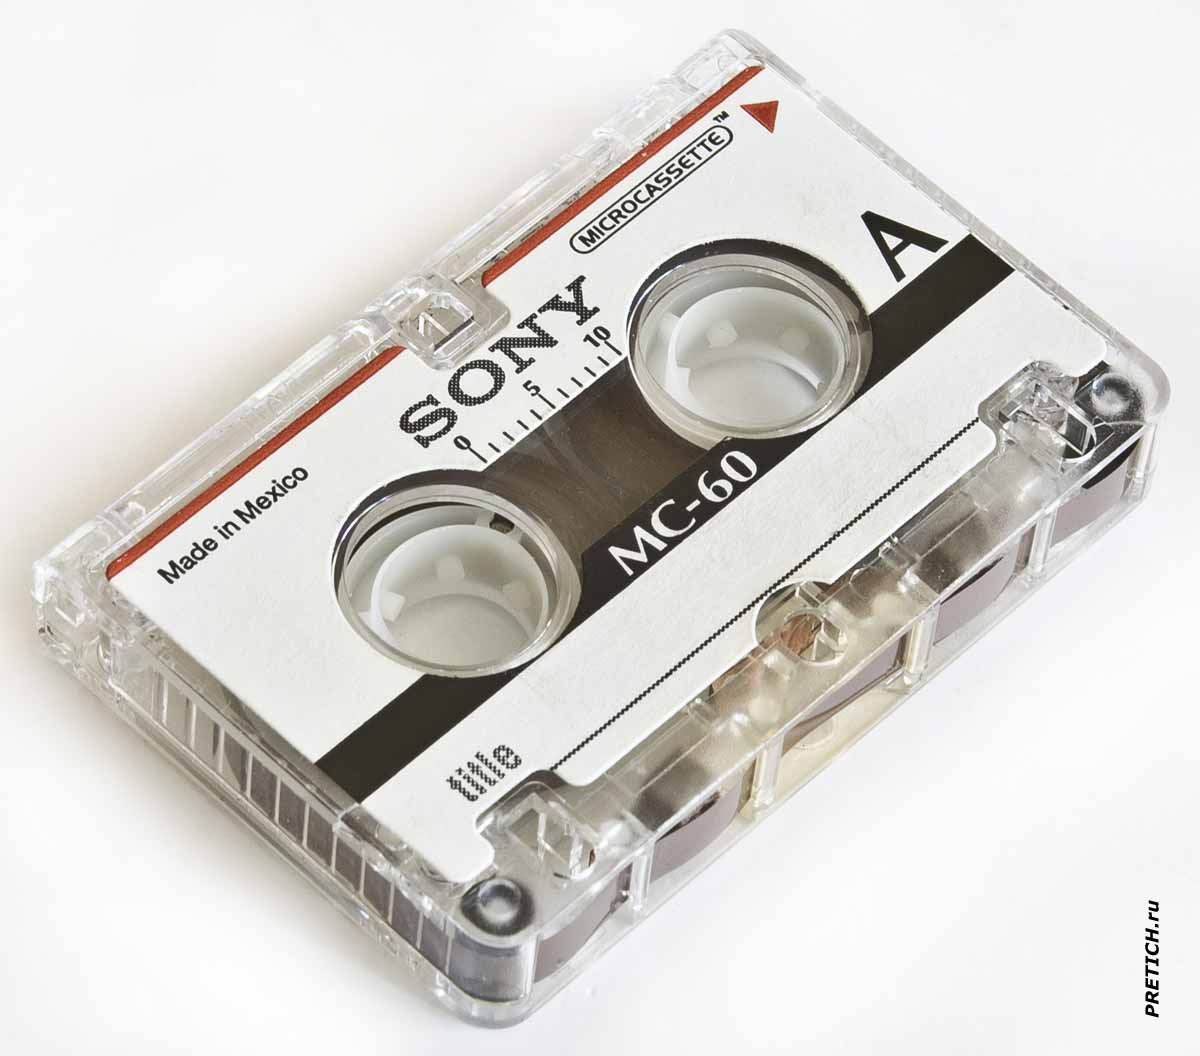 Sony MC-60 Microcassette полное описание микрокассеты